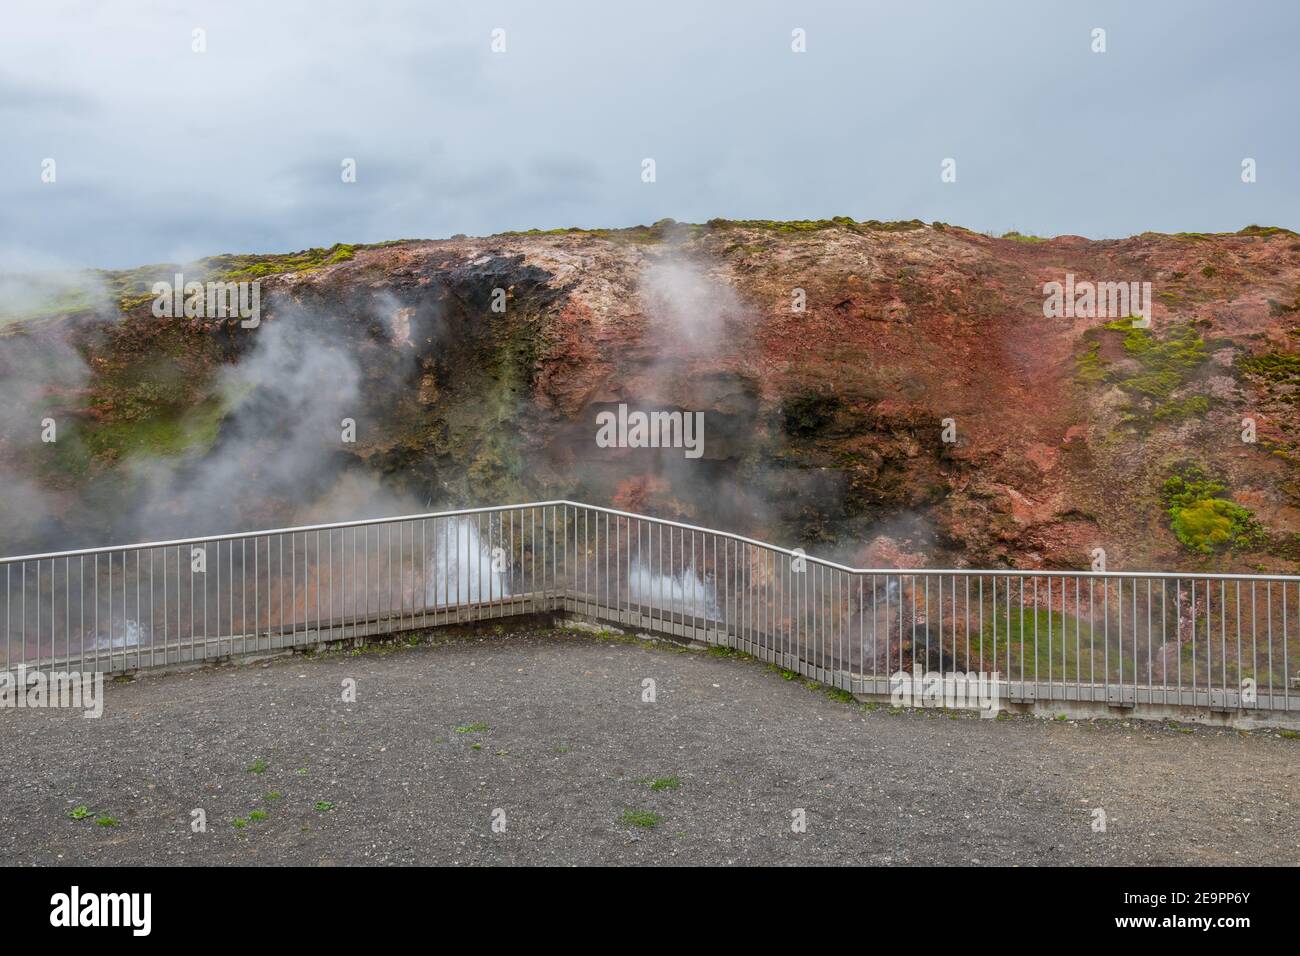 Deildartunguhver hot spring in Borgarfjordur in Iceland Stock Photo